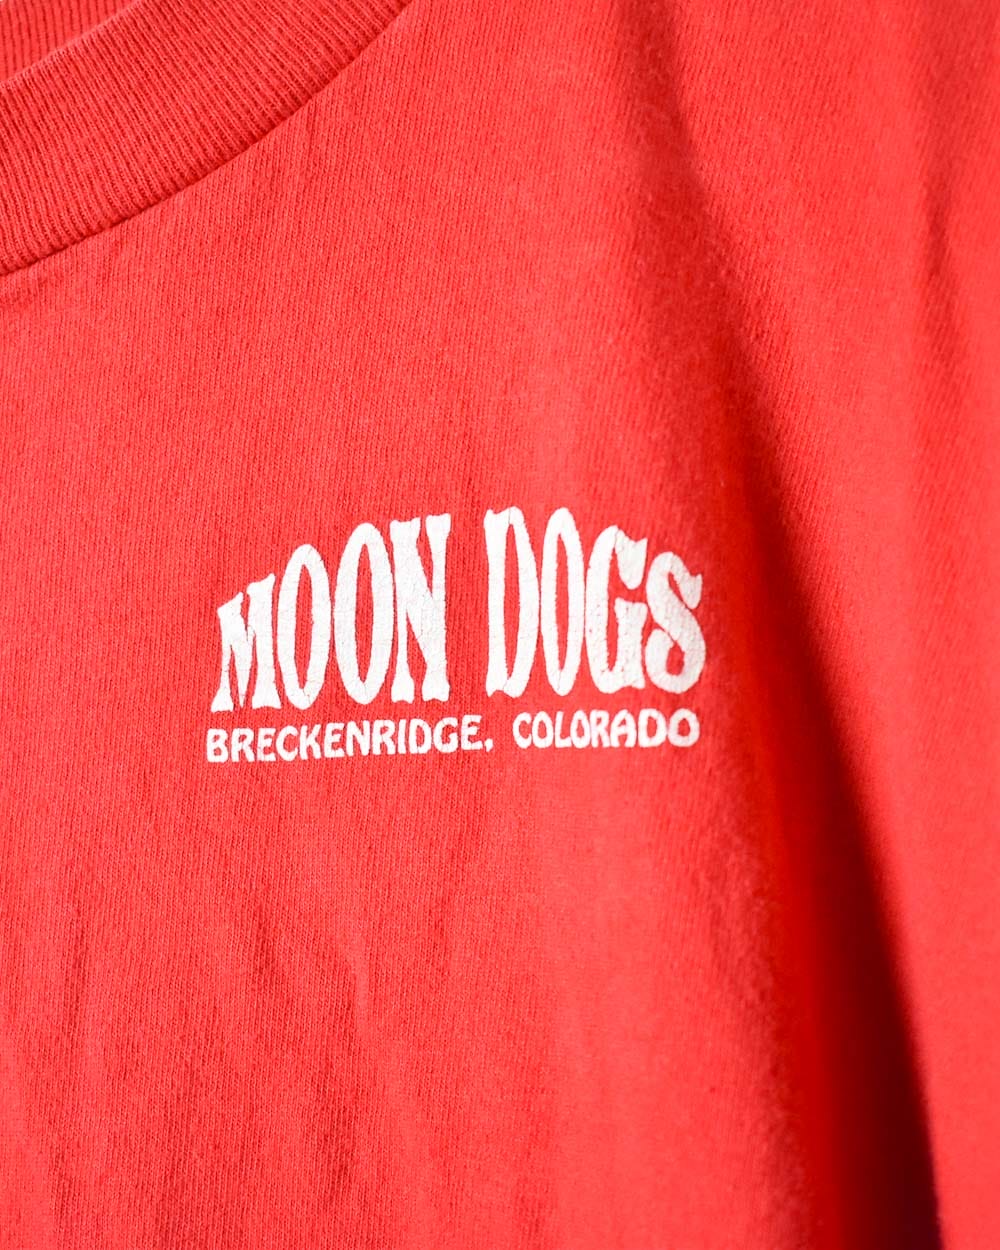 Red Moon Dogs Spring Break '95 Breckenridge Colorado Single Stitch T-Shirt - X-Large